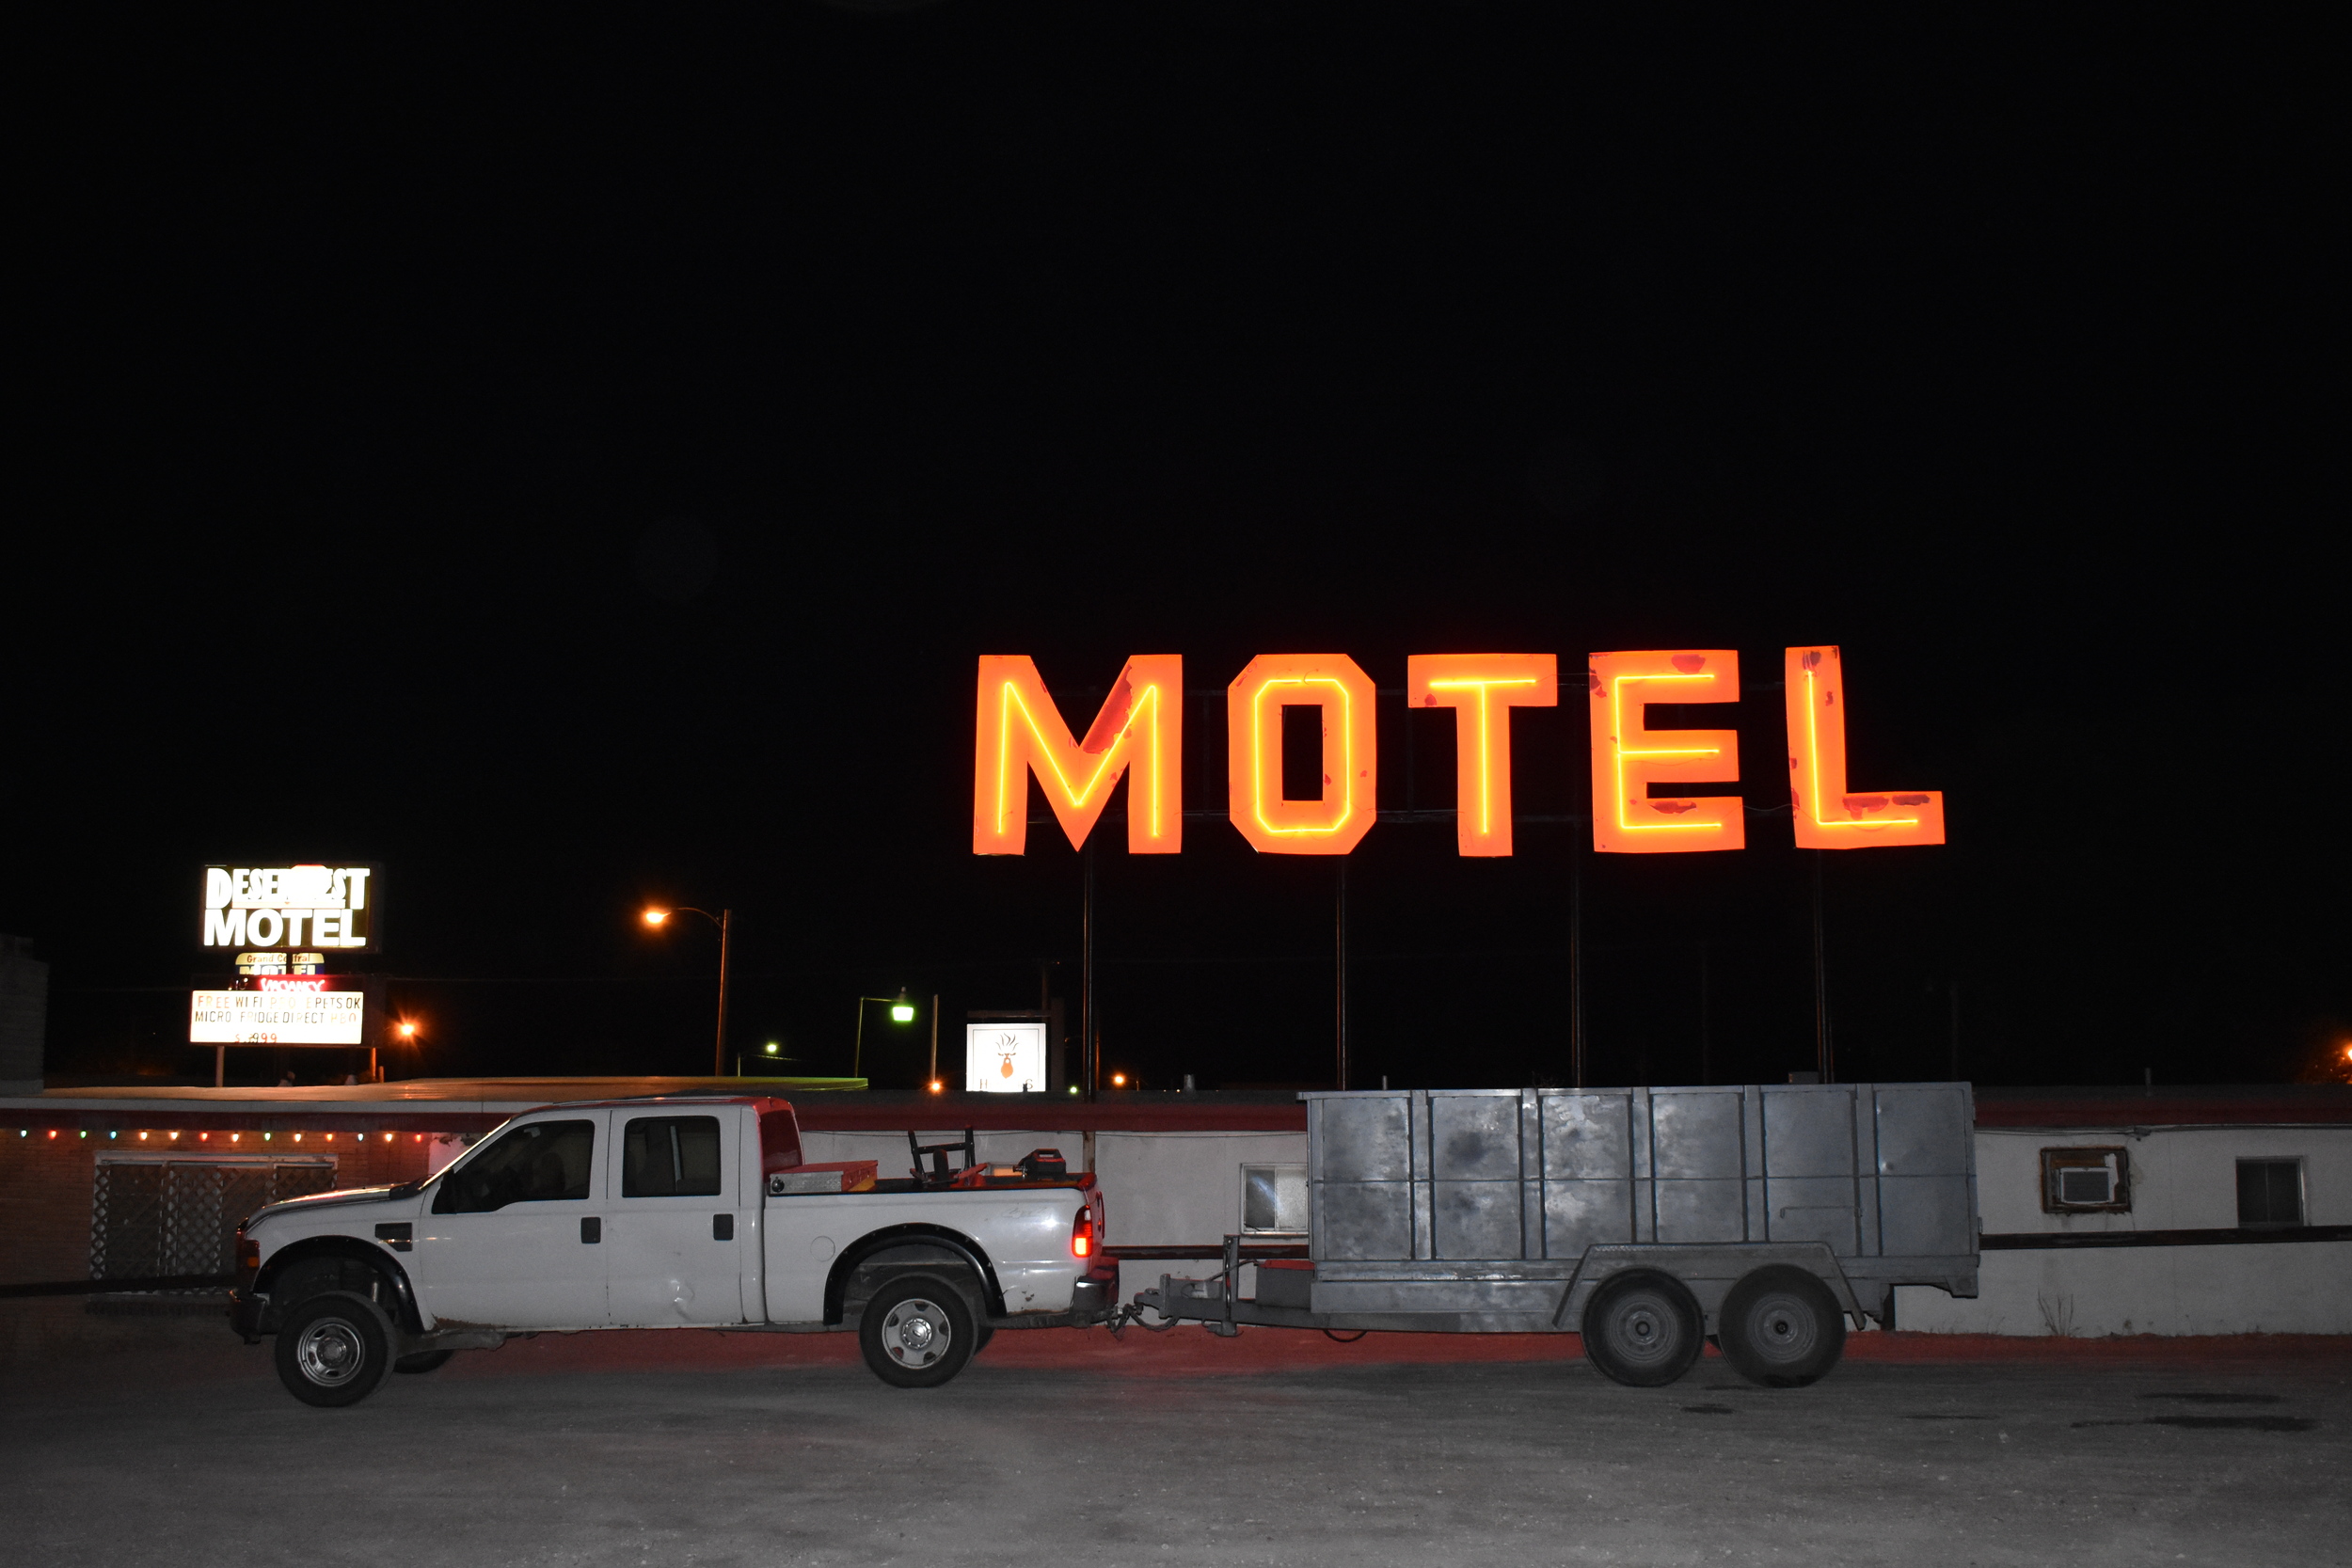 Deser-est Motel mounted signs, Ely, Nevada